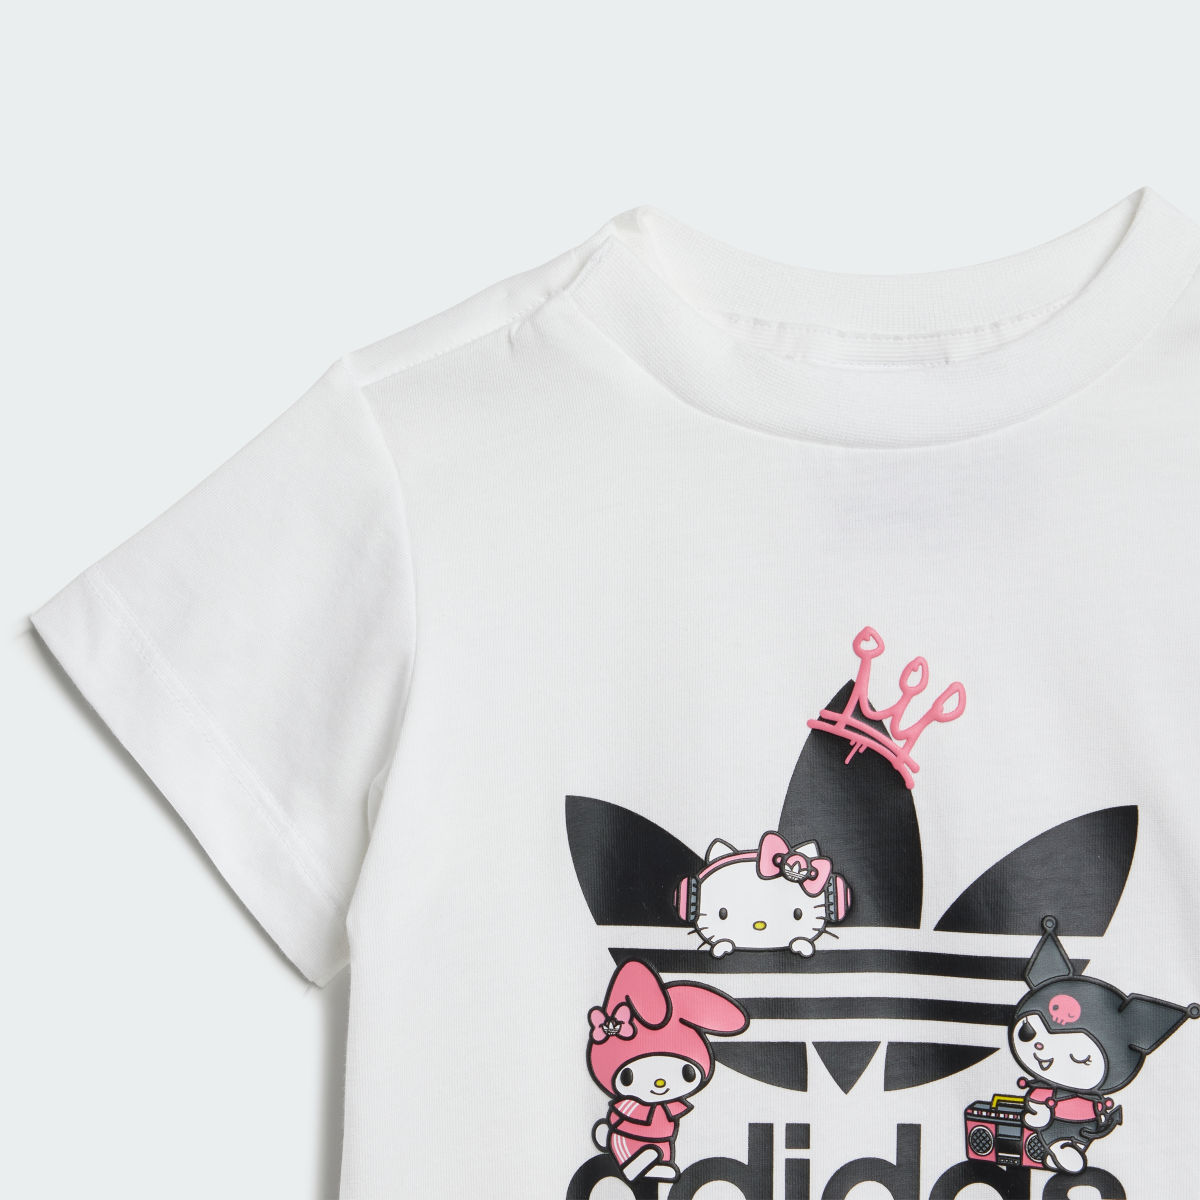 Adidas Originals x Hello Kitty Elbise Tayt Takımı. 8